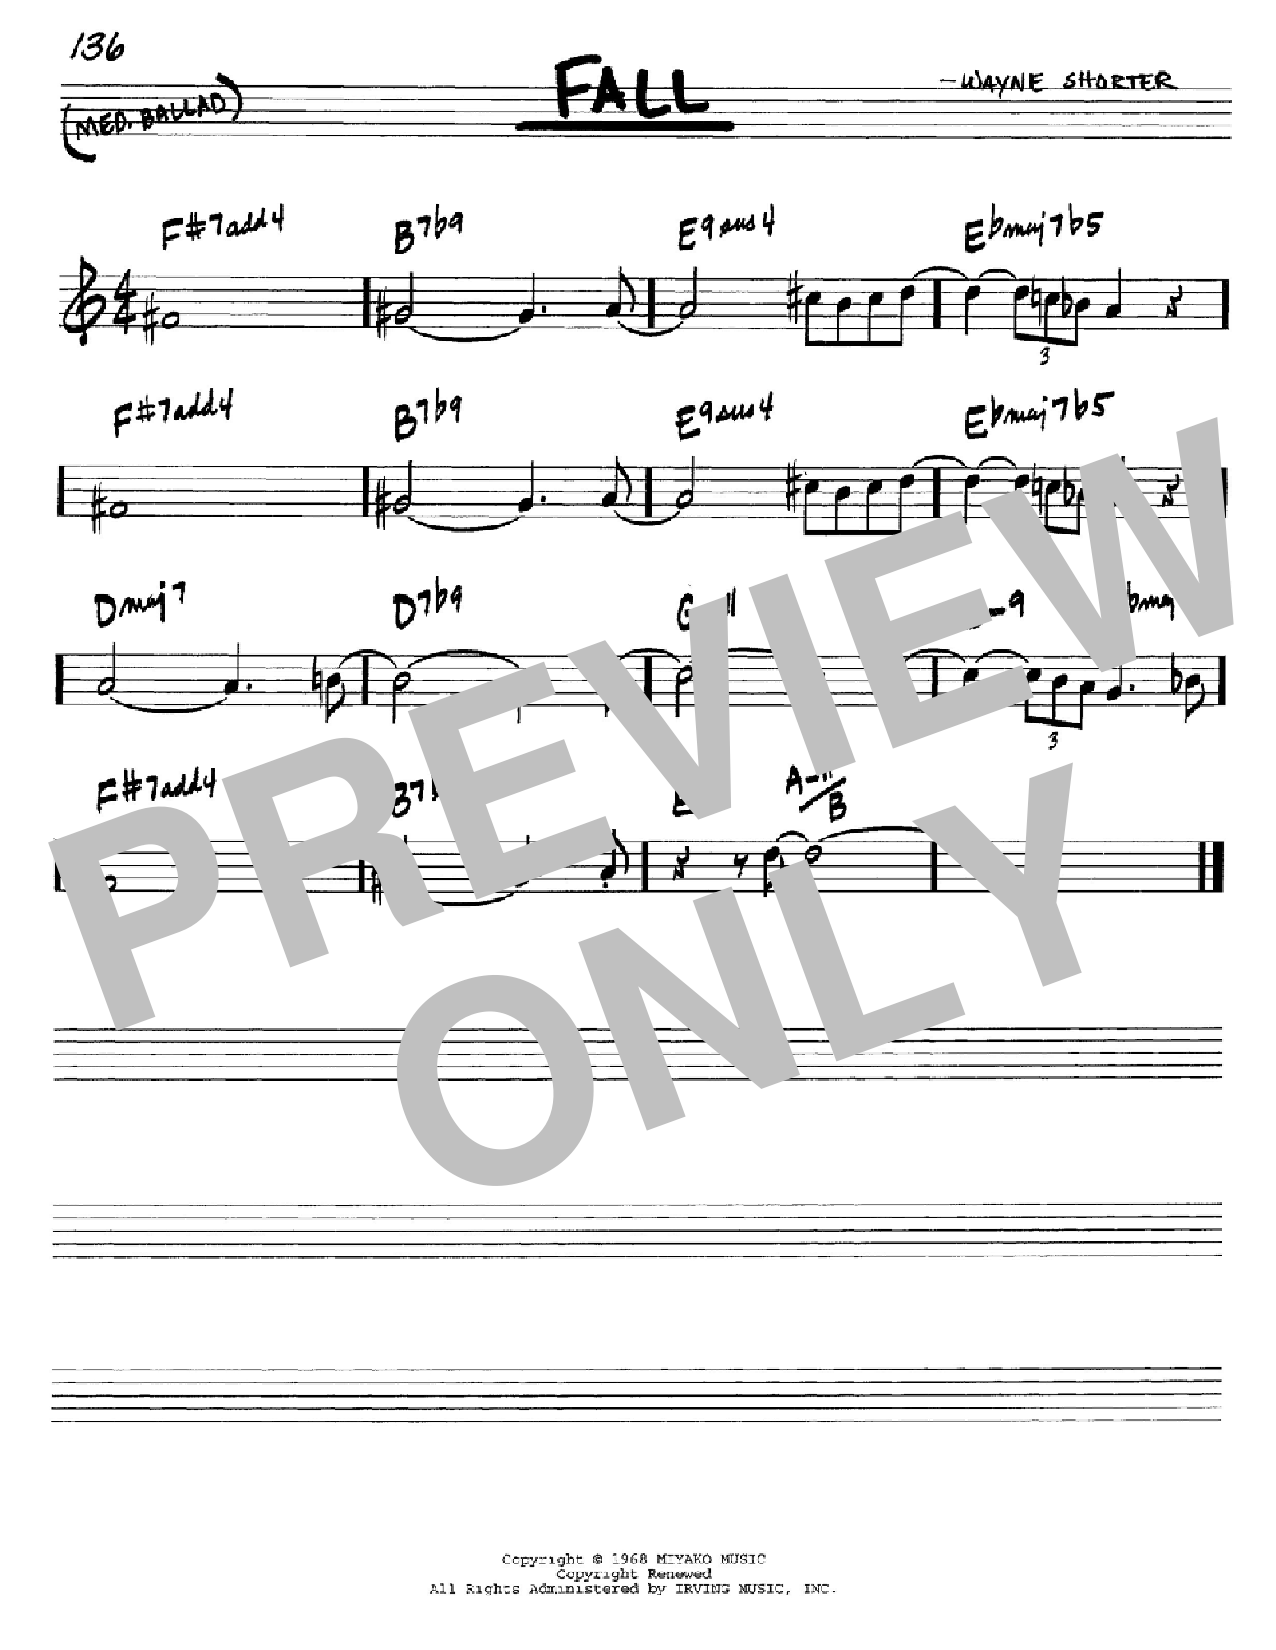 Wayne Shorter Fall Sheet Music Notes & Chords for Real Book - Melody & Chords - C Instruments - Download or Print PDF